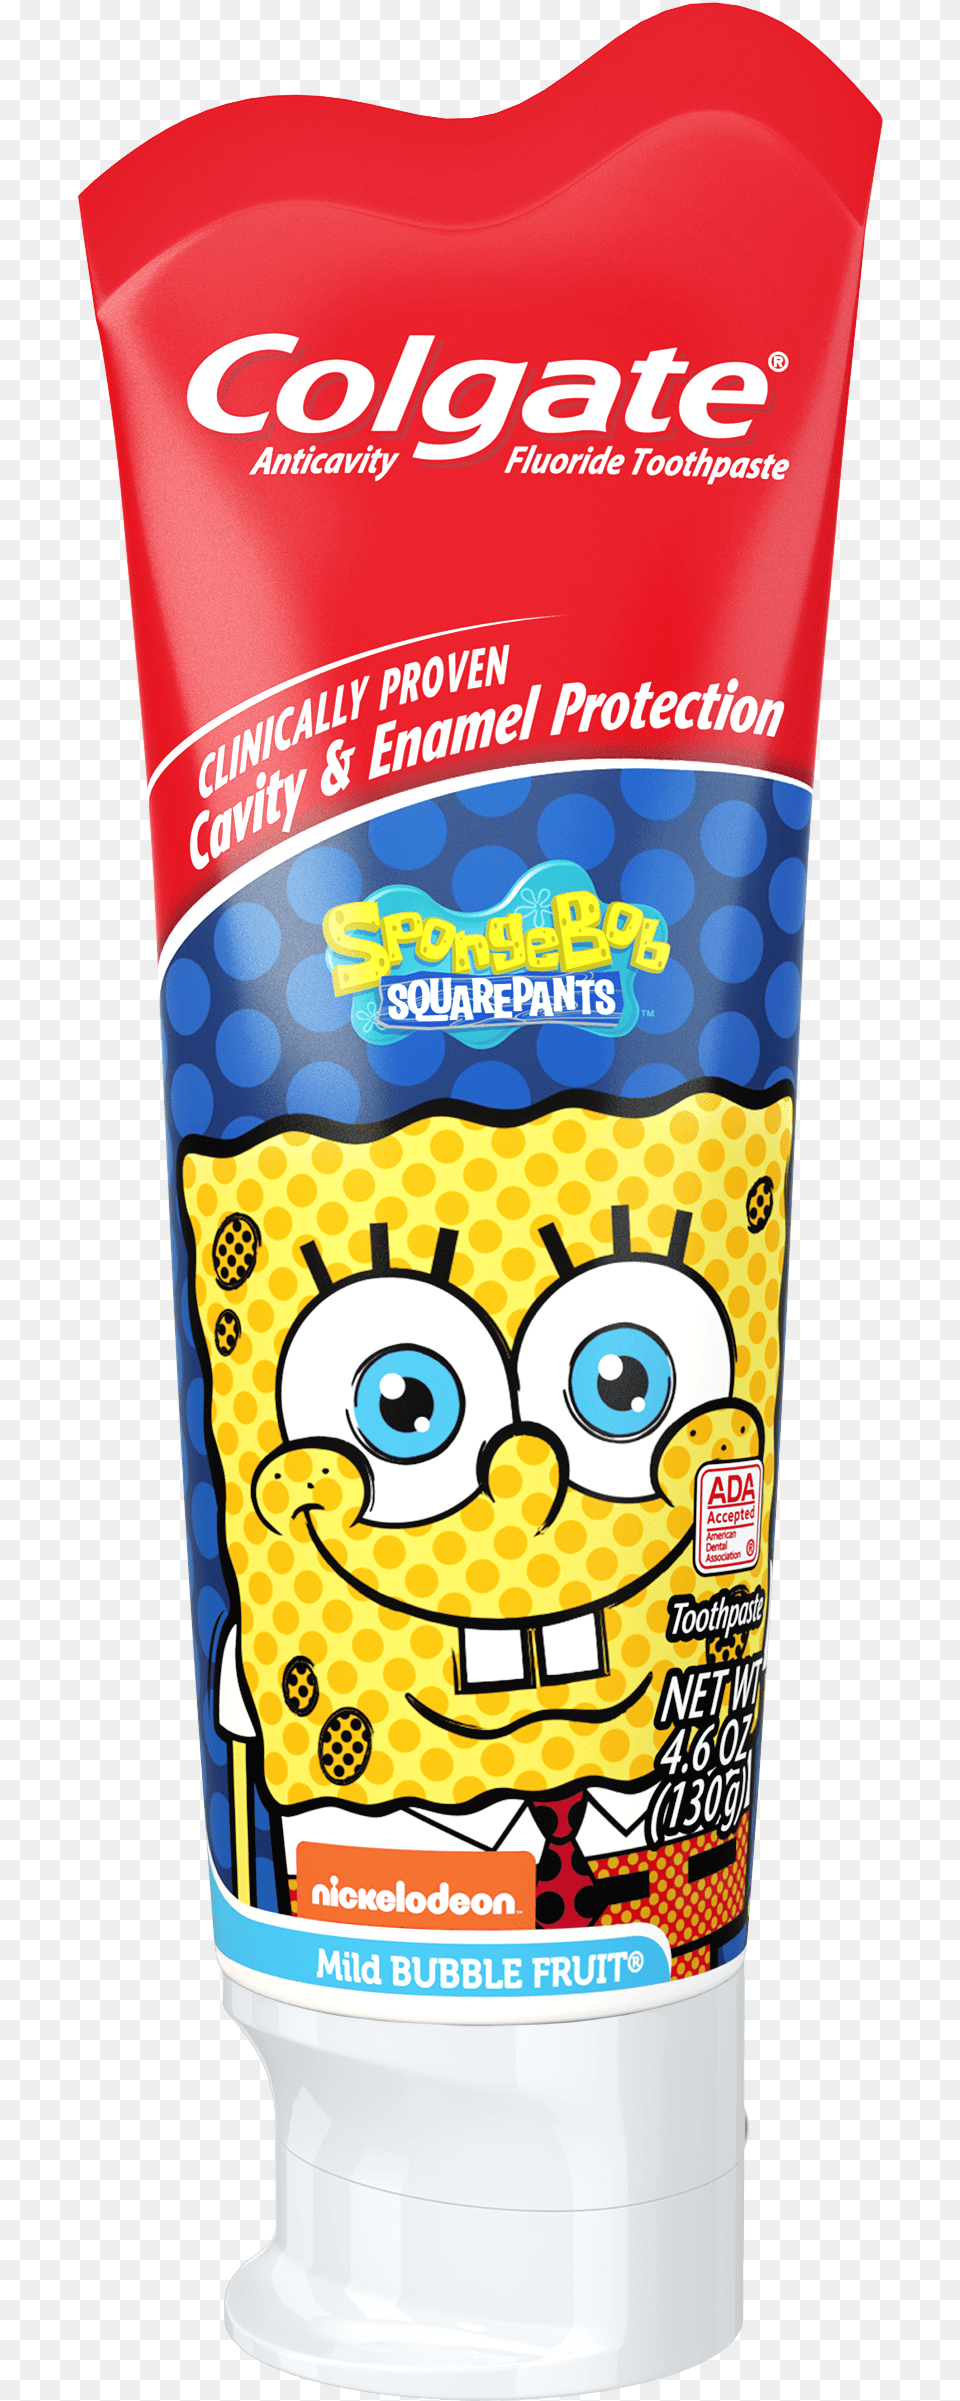 Colgate Spongebob Squarepants Fluoride Toothpaste Mild Colgate For Kids Spongebob, Bottle, Cosmetics, Sunscreen, Alcohol Png